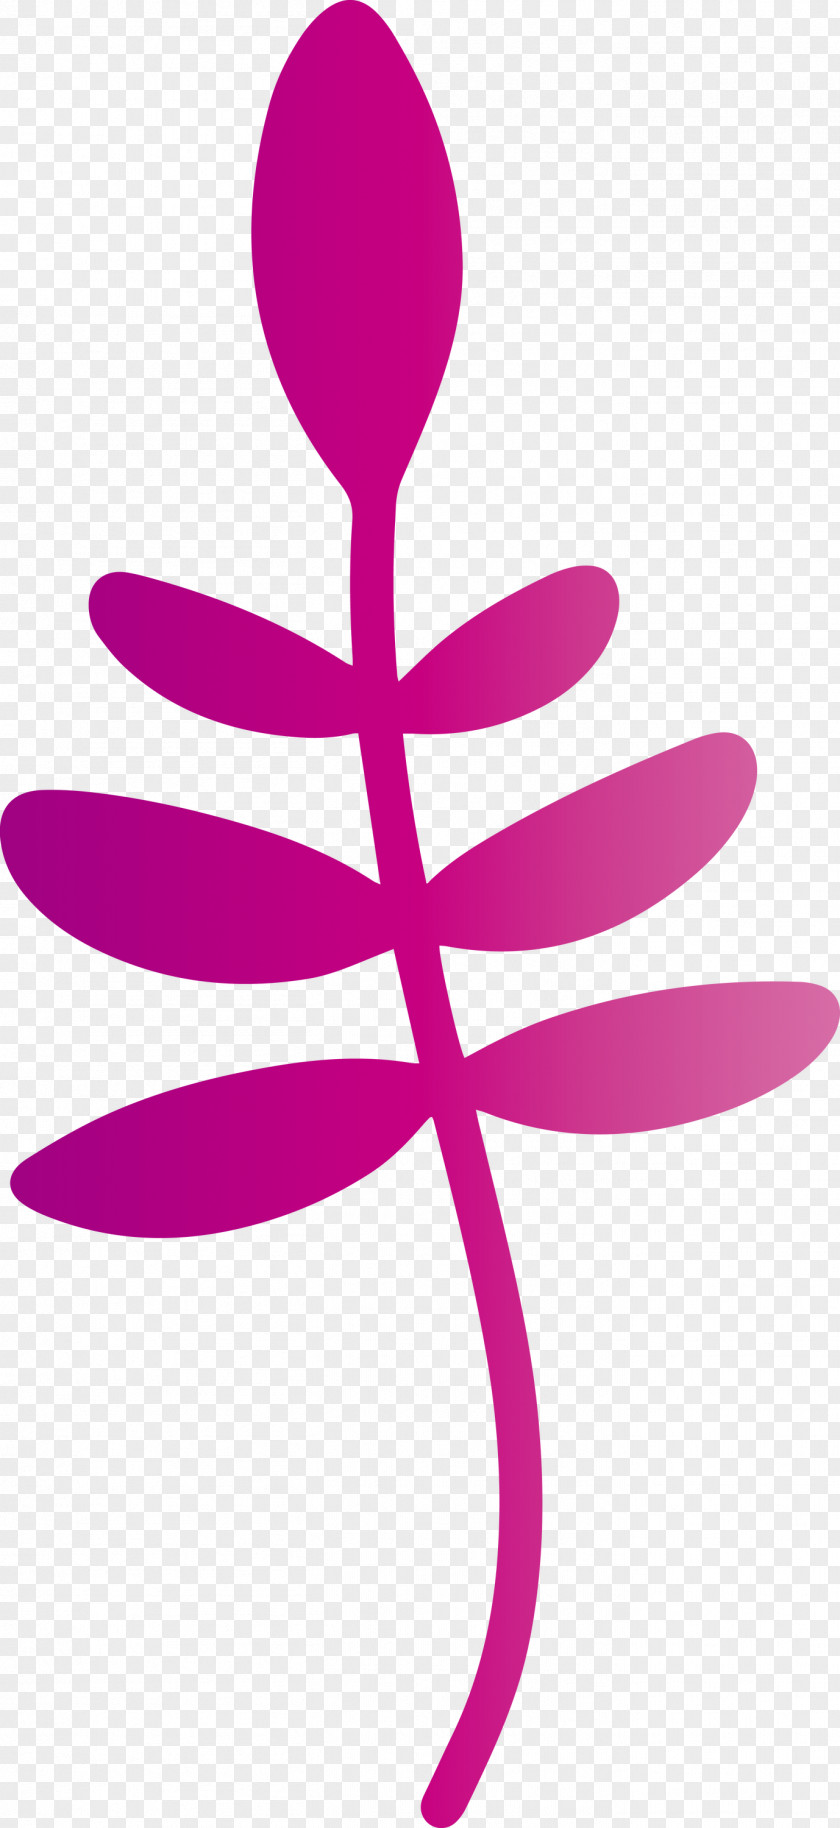 Flower Petal Line Meter Symbol PNG